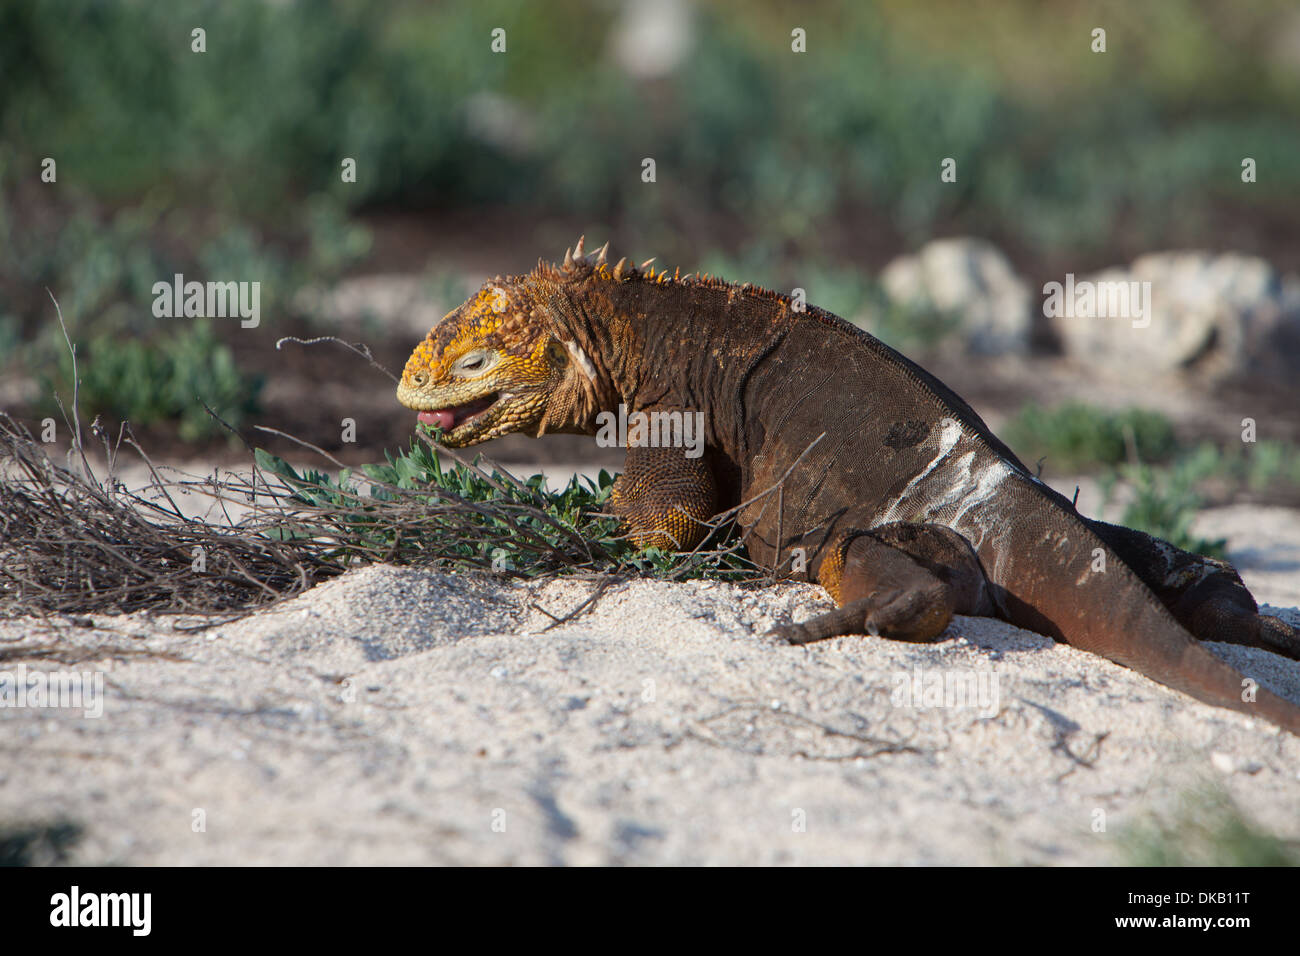 Conolophus subchristatus Land Iguana reptilian Stock Photo